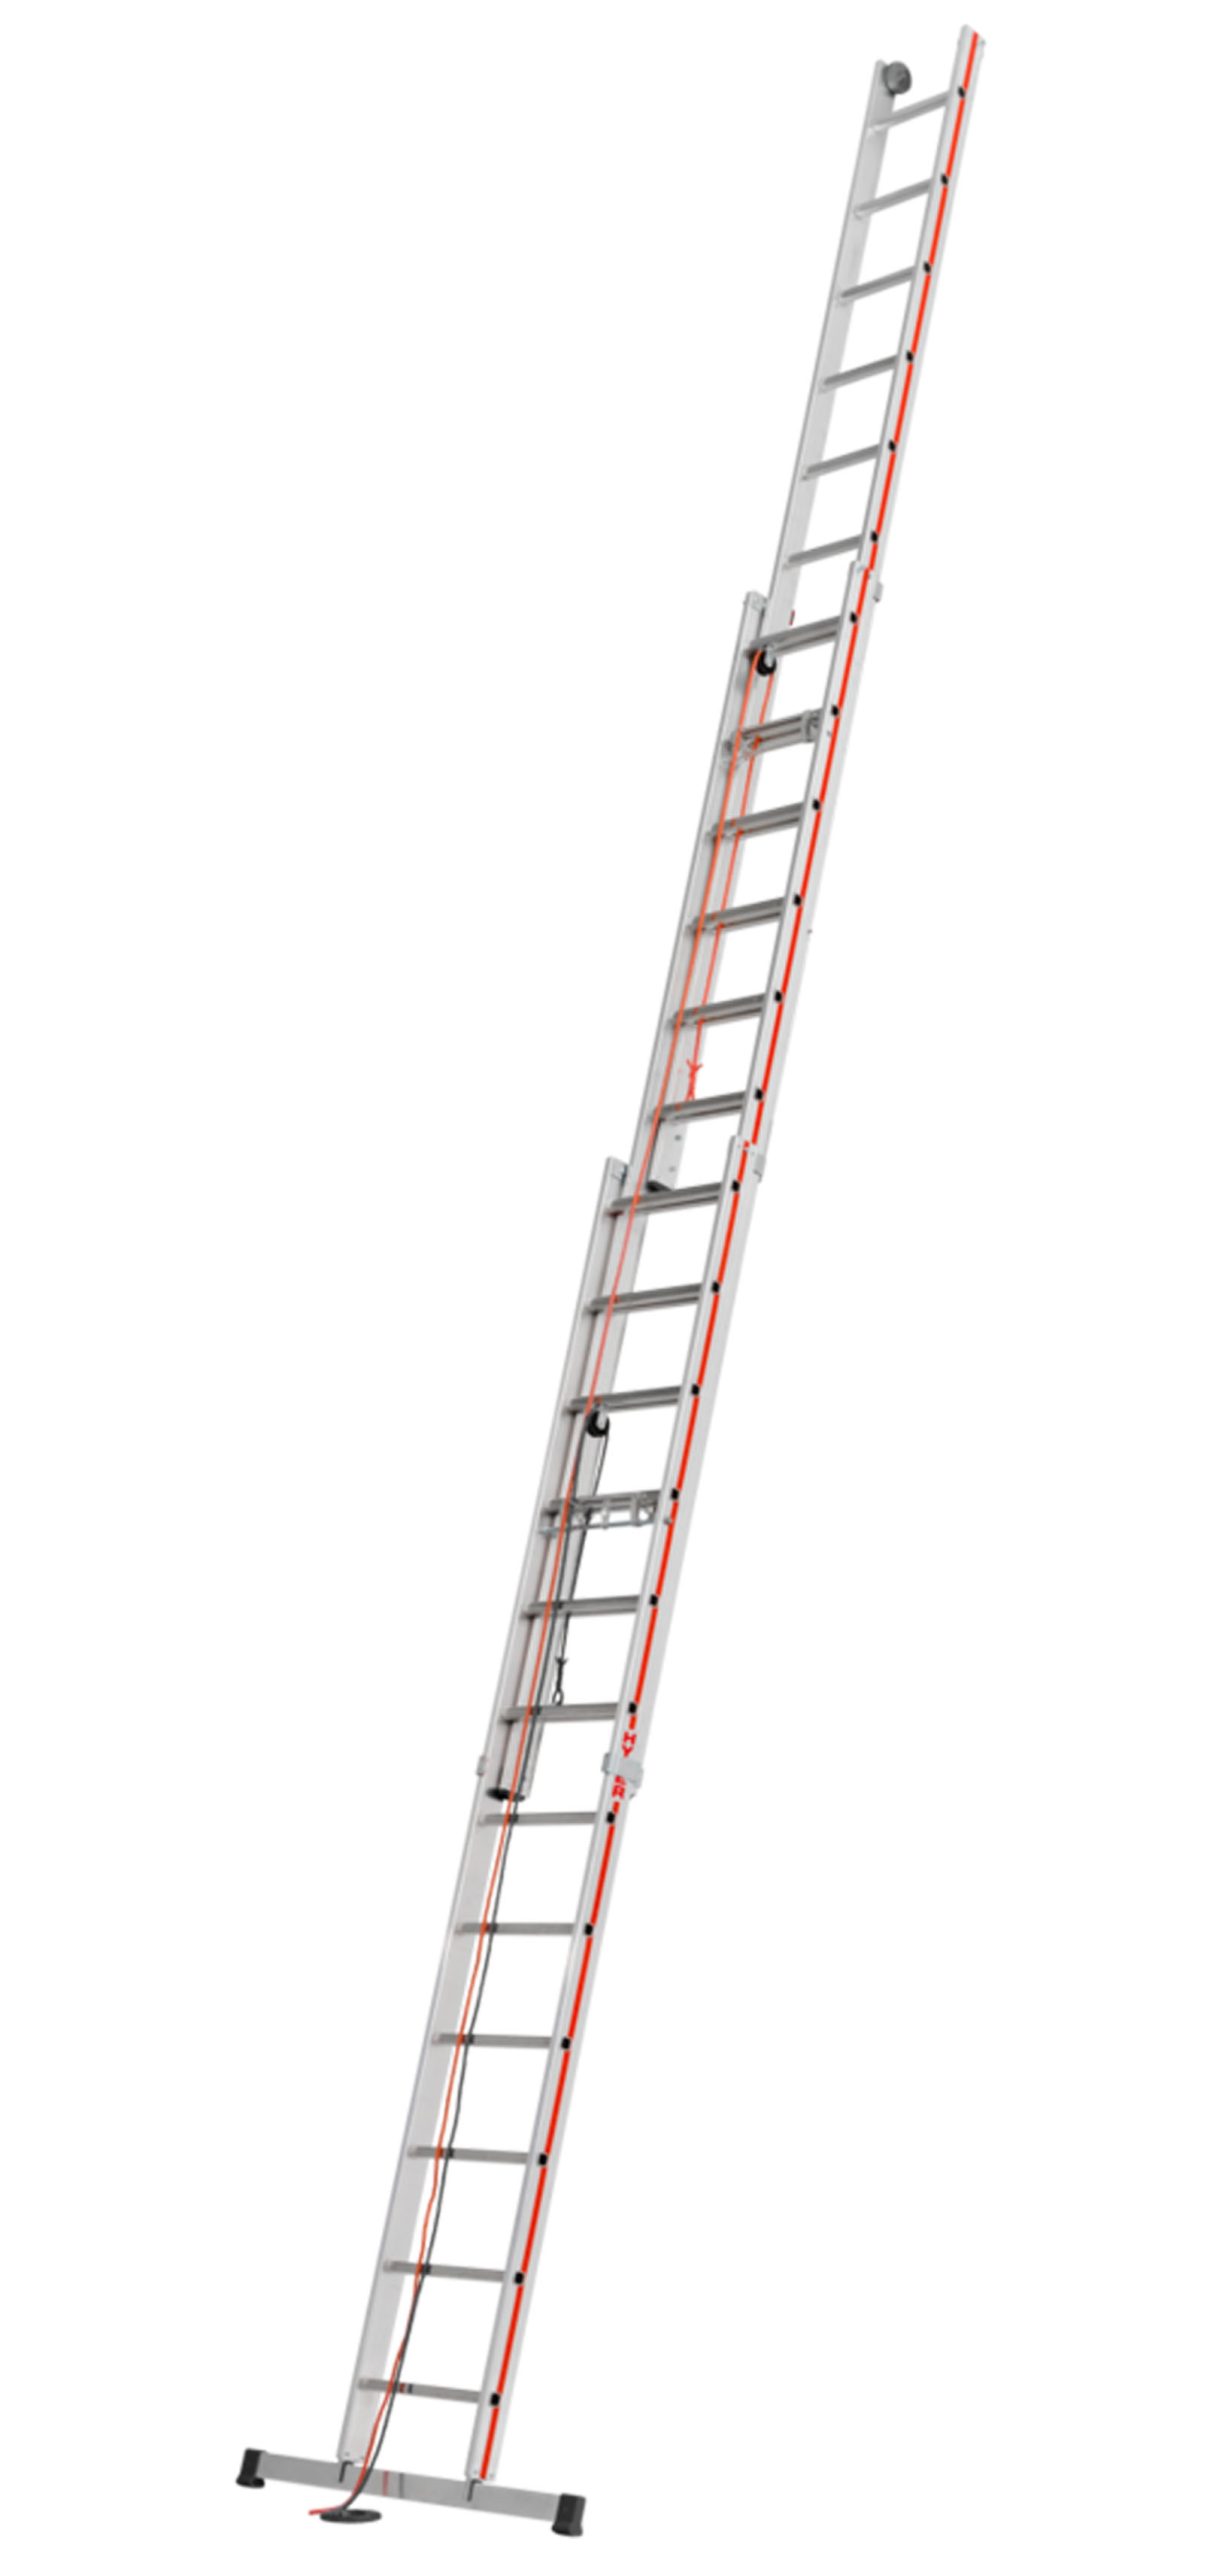 Escalera de aluminio extensible a cuerda de tres tramos